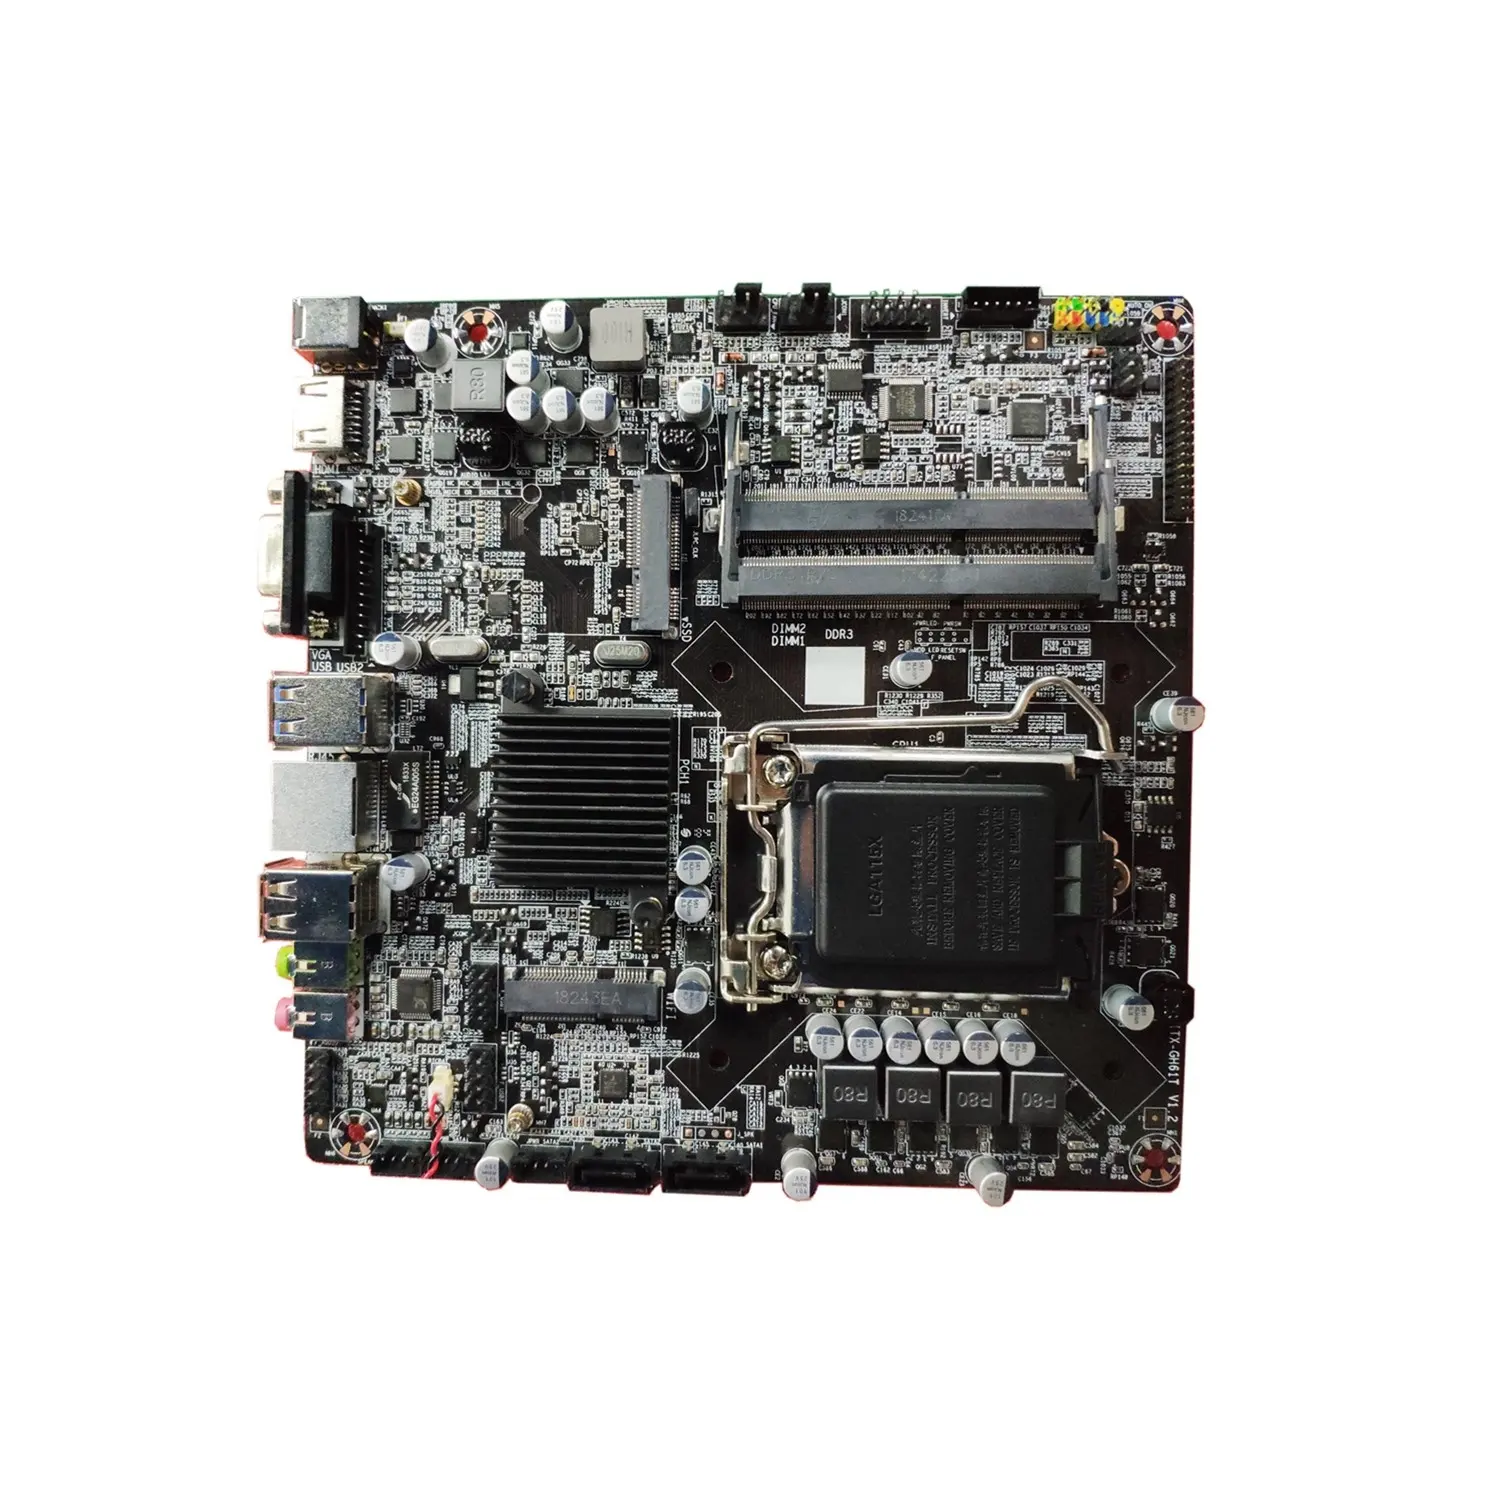 Funzione avanzata Mini Itx LGA 1155 H61 Chipset scheda madre DC JACK 12V 19V per POS MINI PC